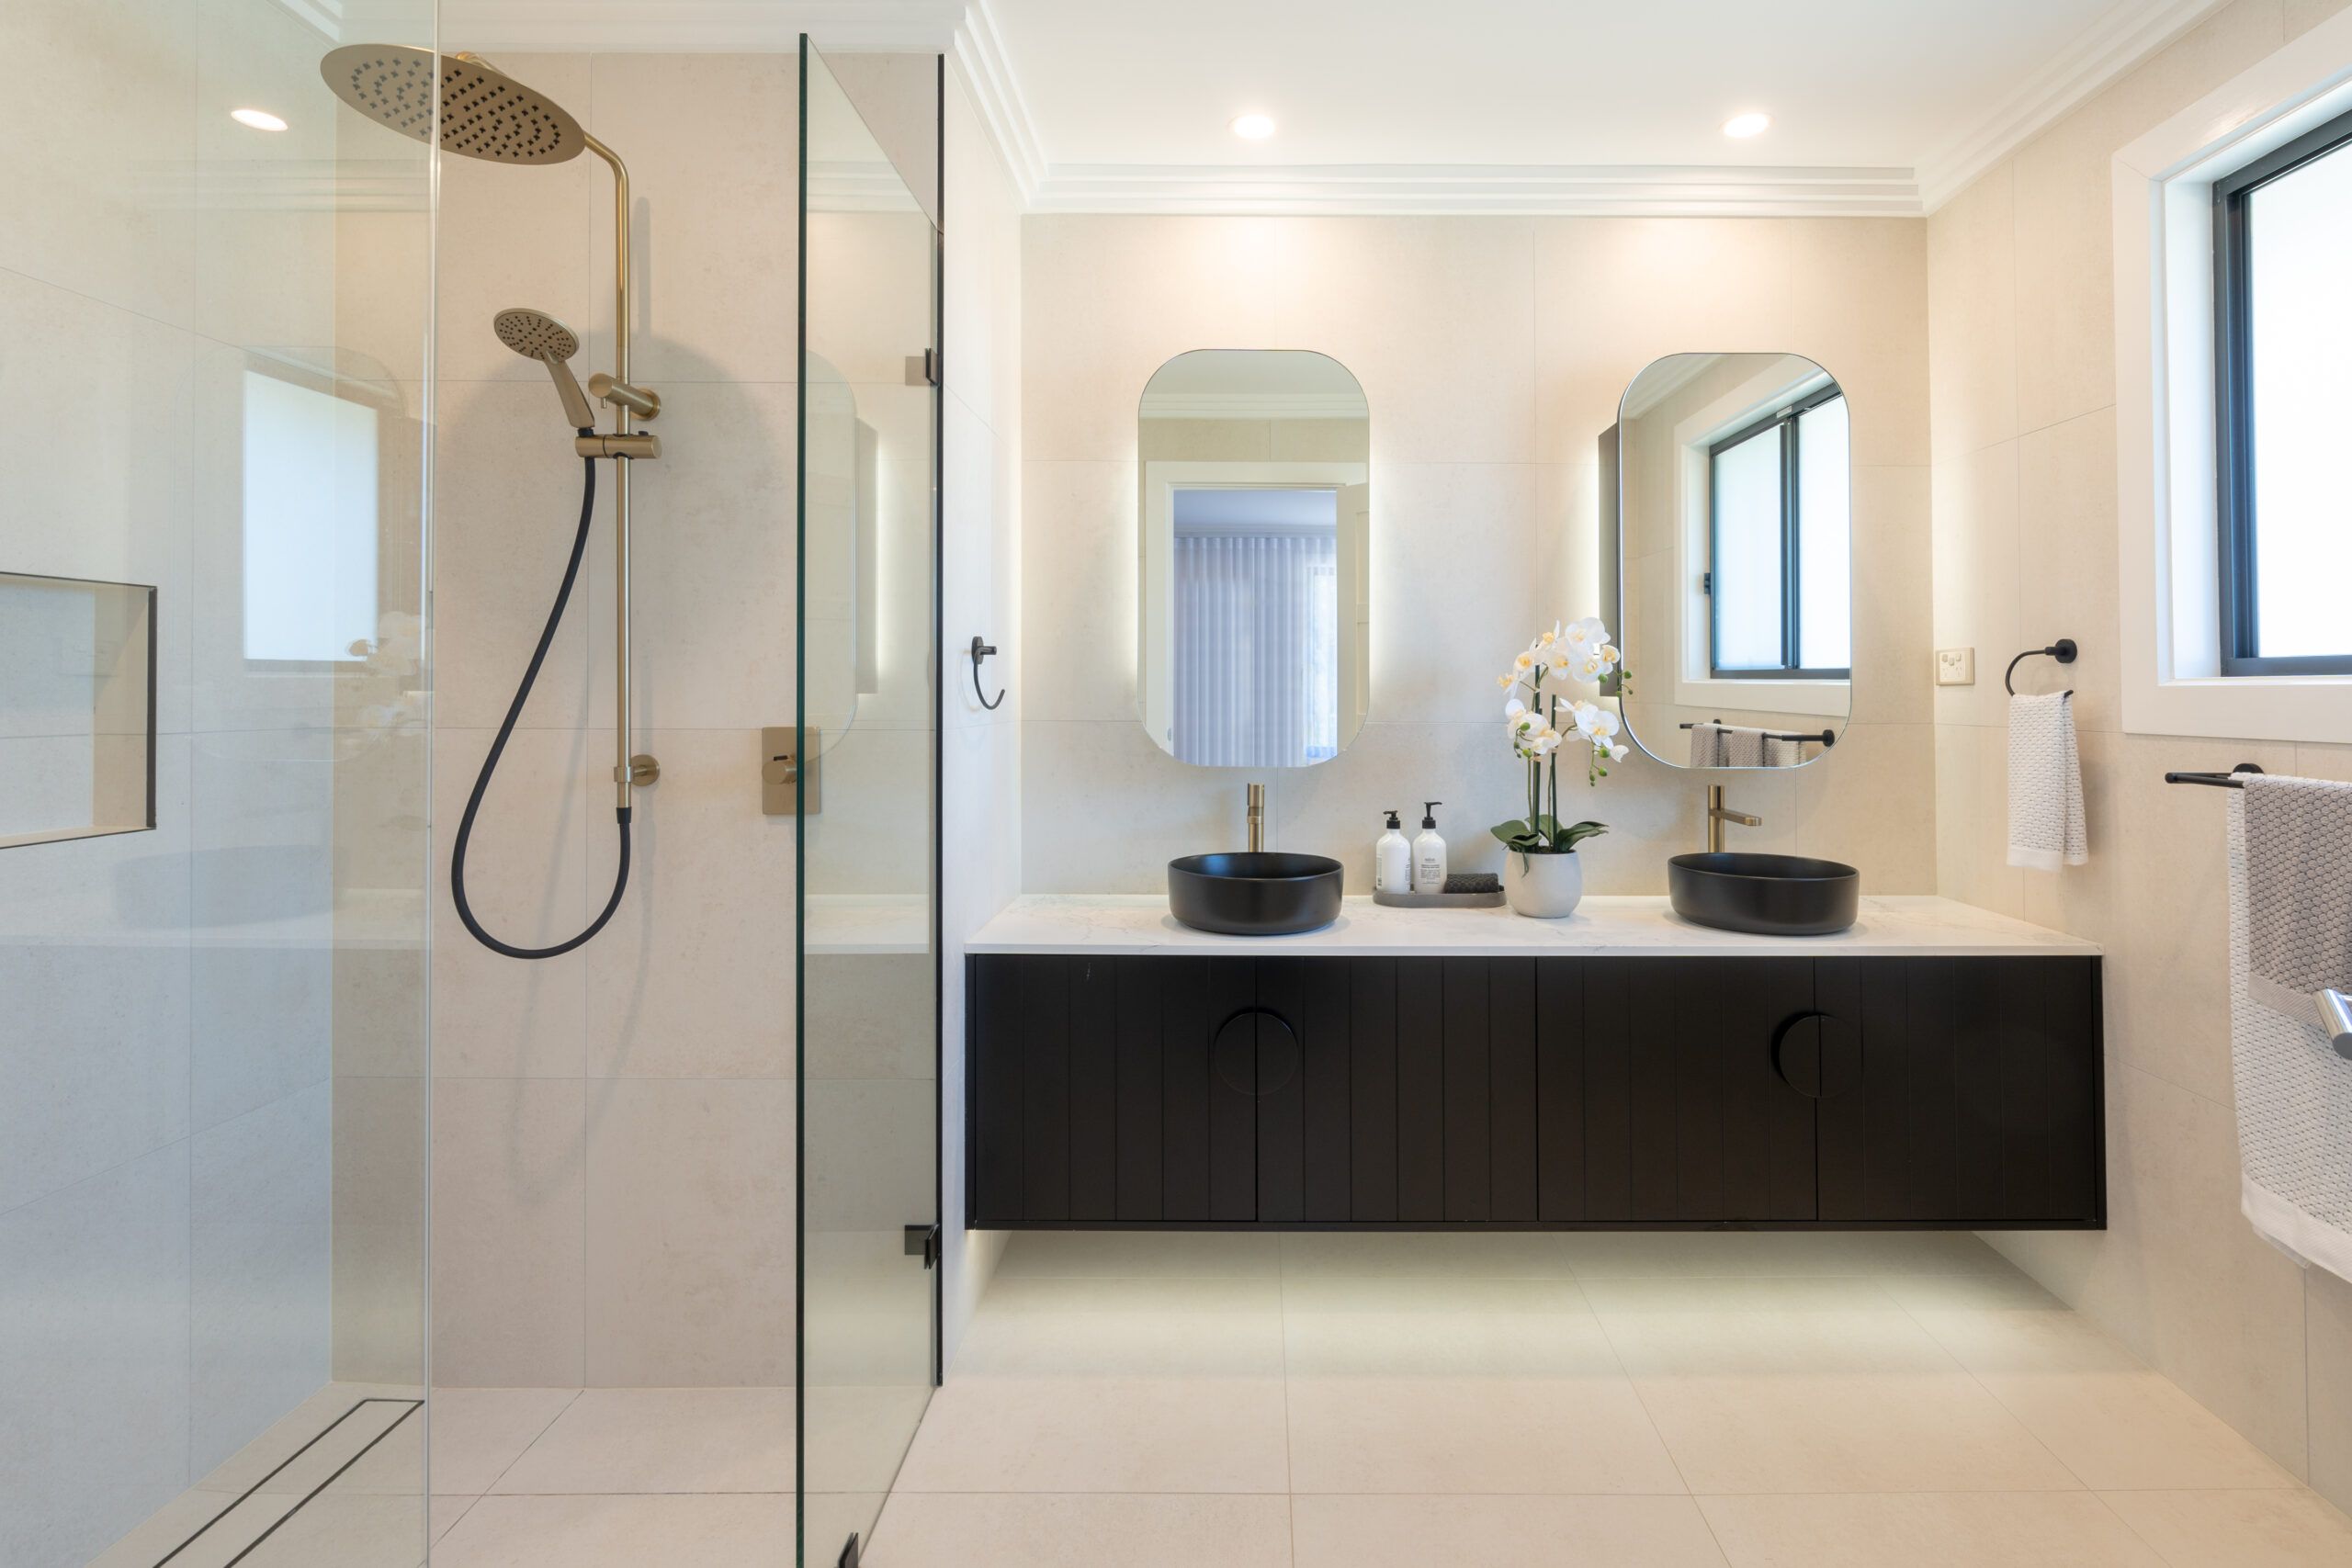 Monochrome modern bathroom design